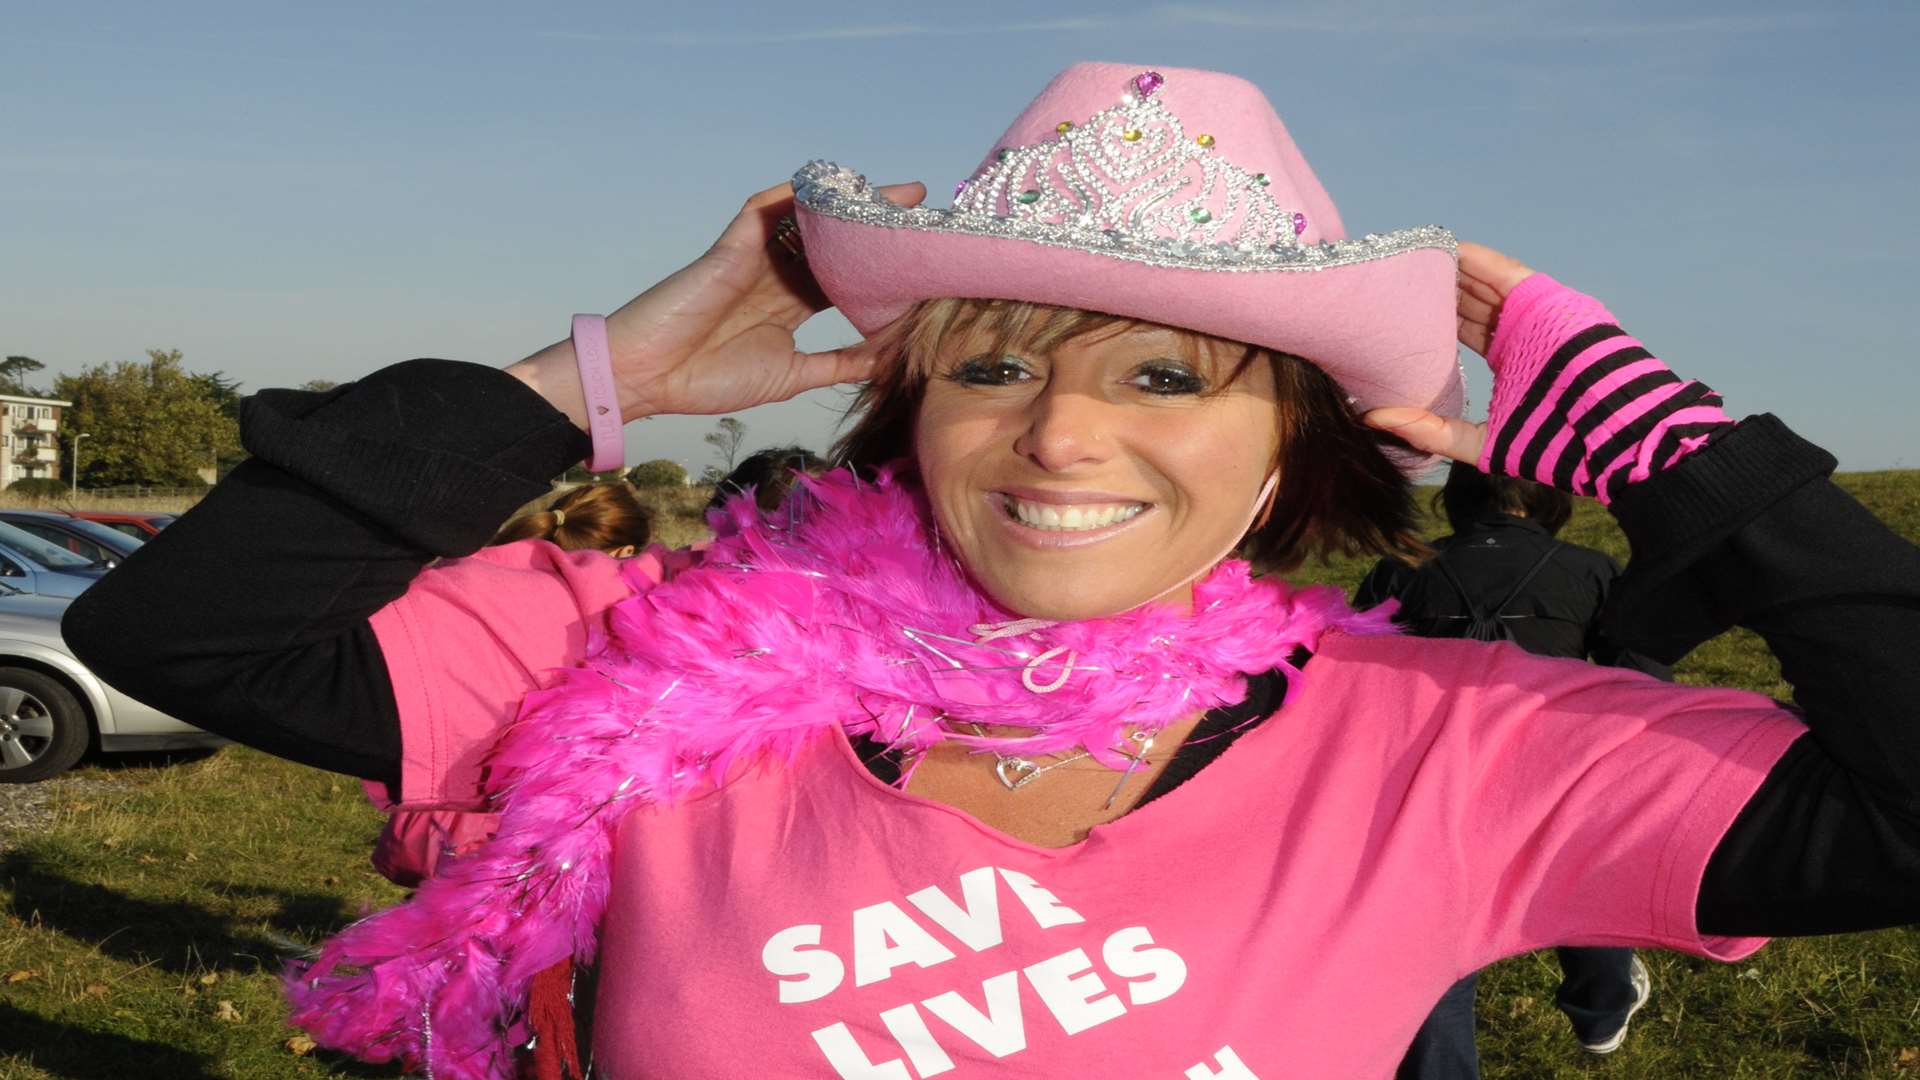 Breakthrough Breast Cancer ambassador Kerry Rubins